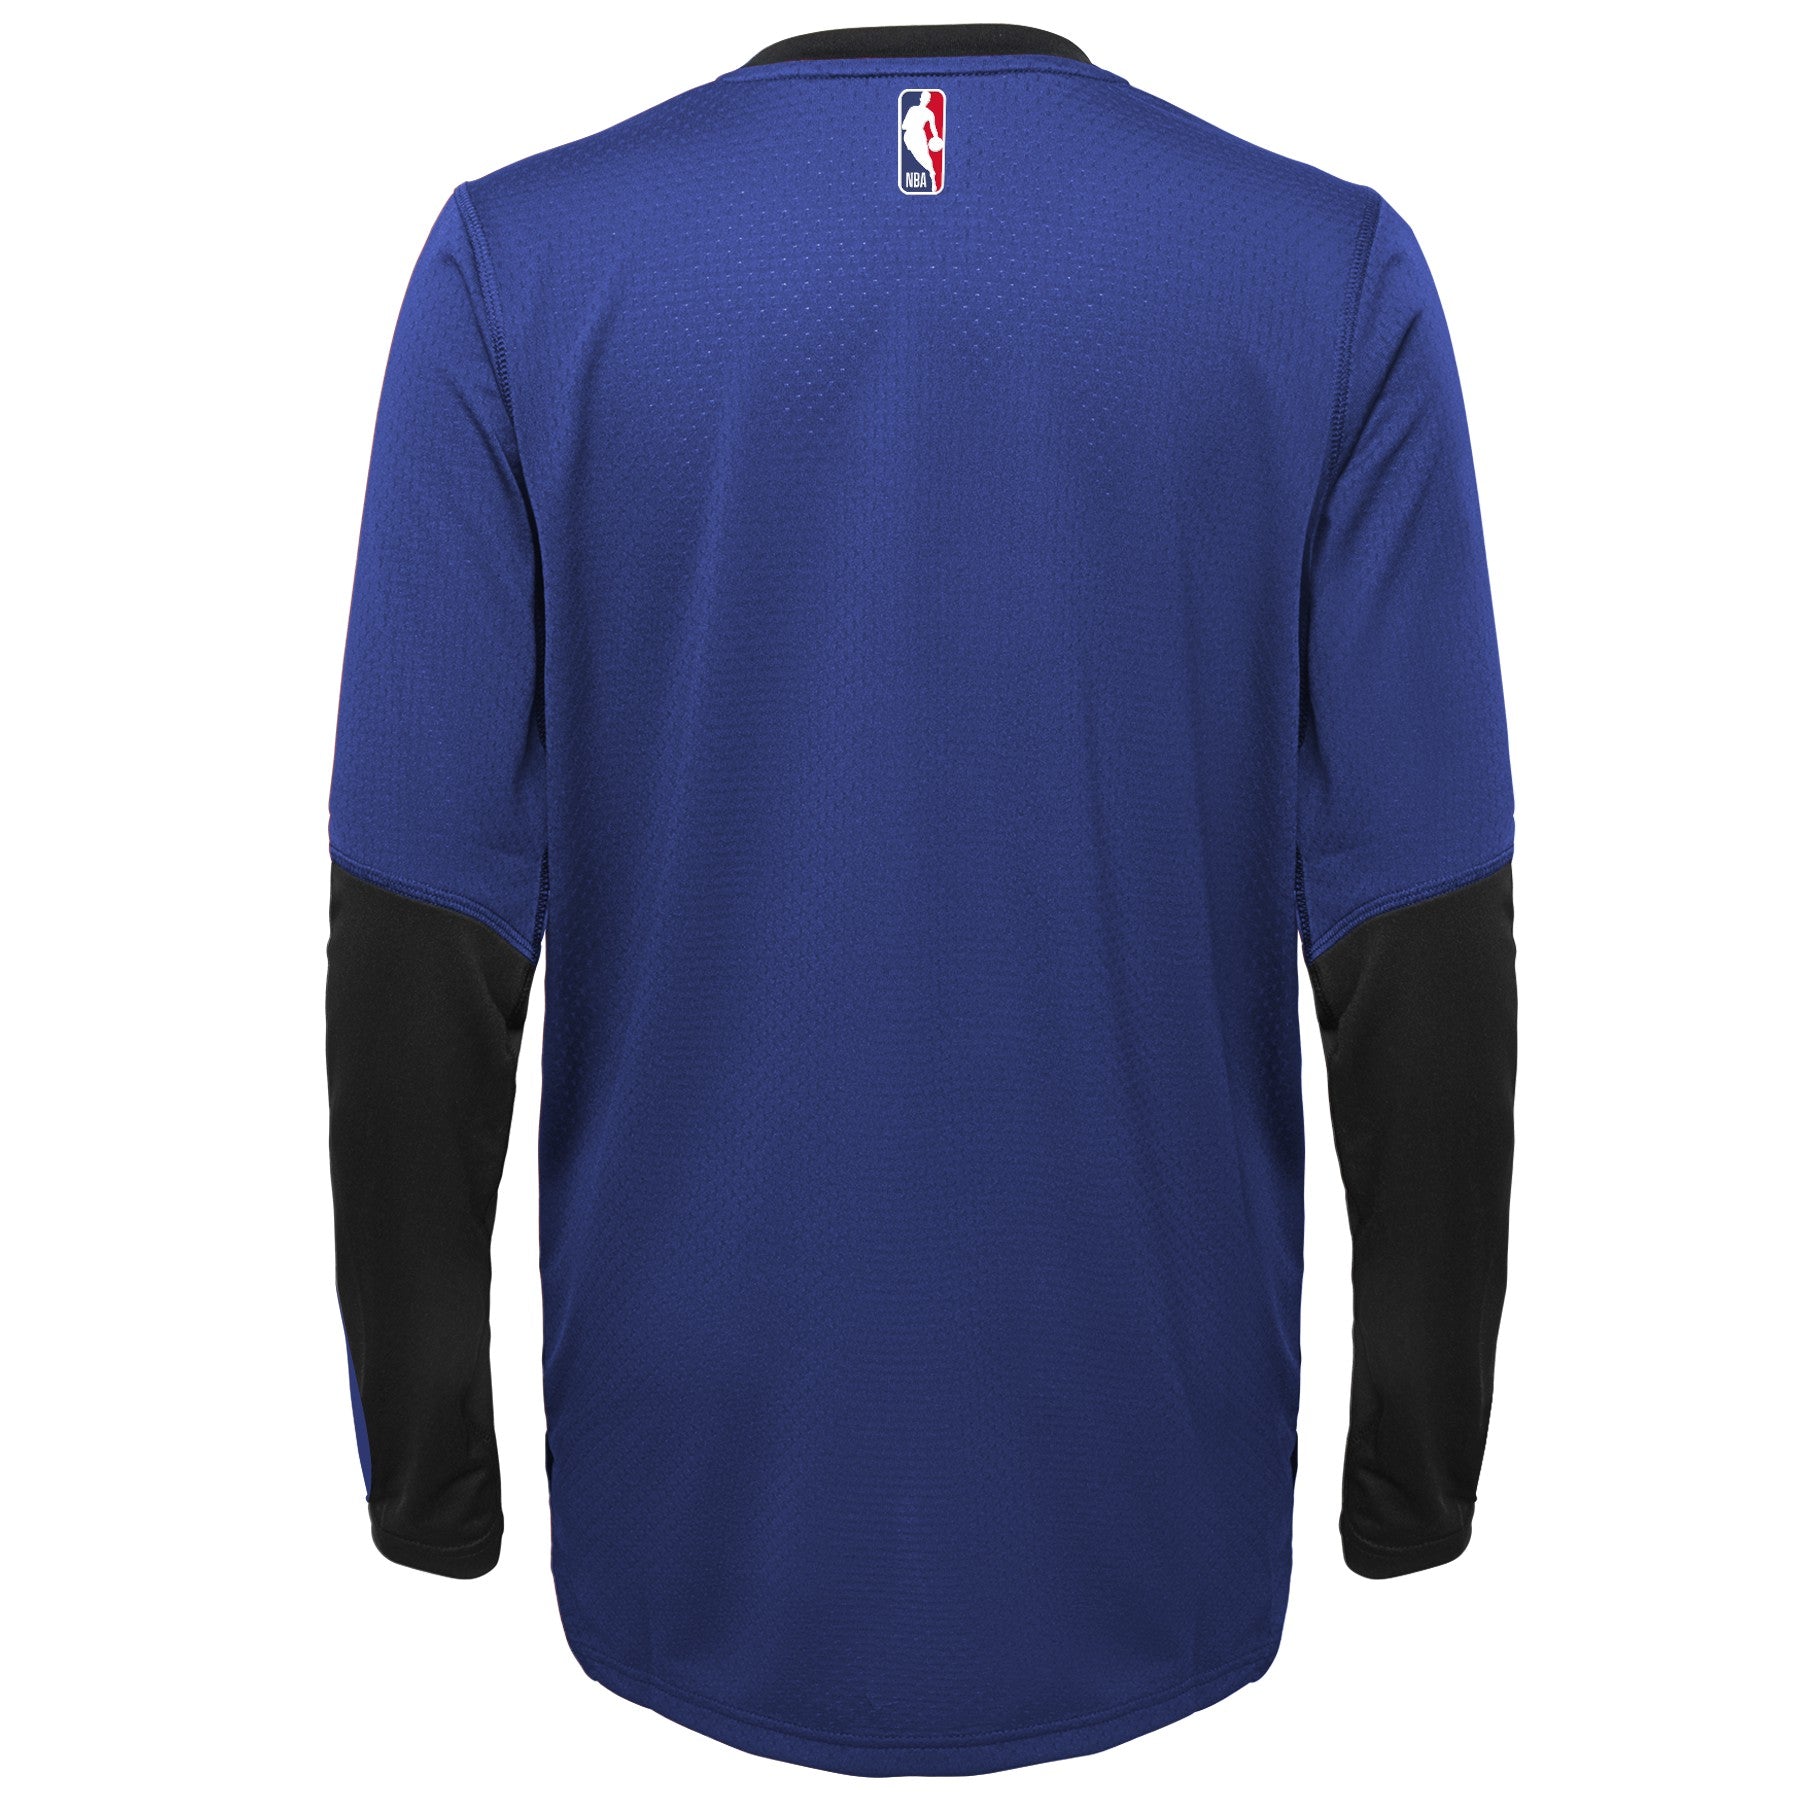 Nike Men's New York Knicks NBA T-Shirt